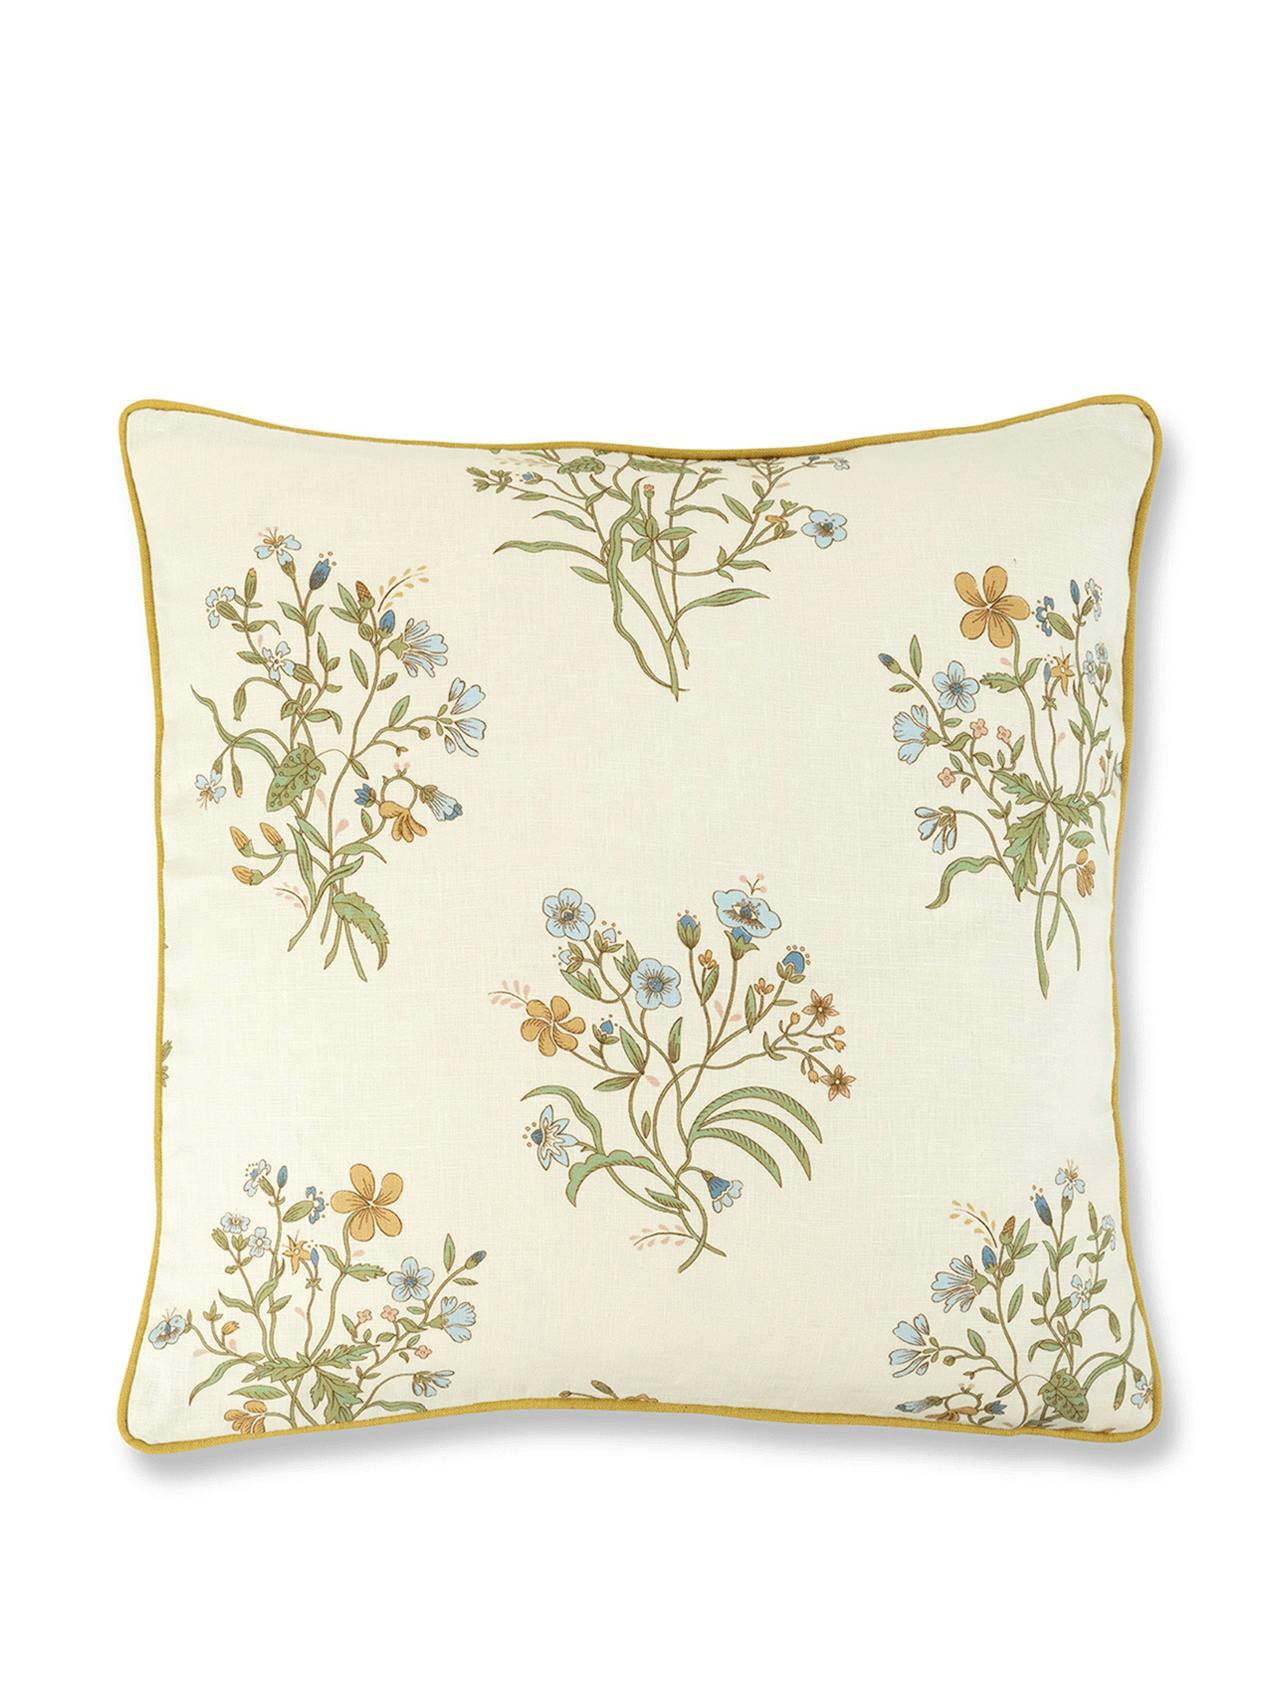 Flax and field flower cushion with ochre trim